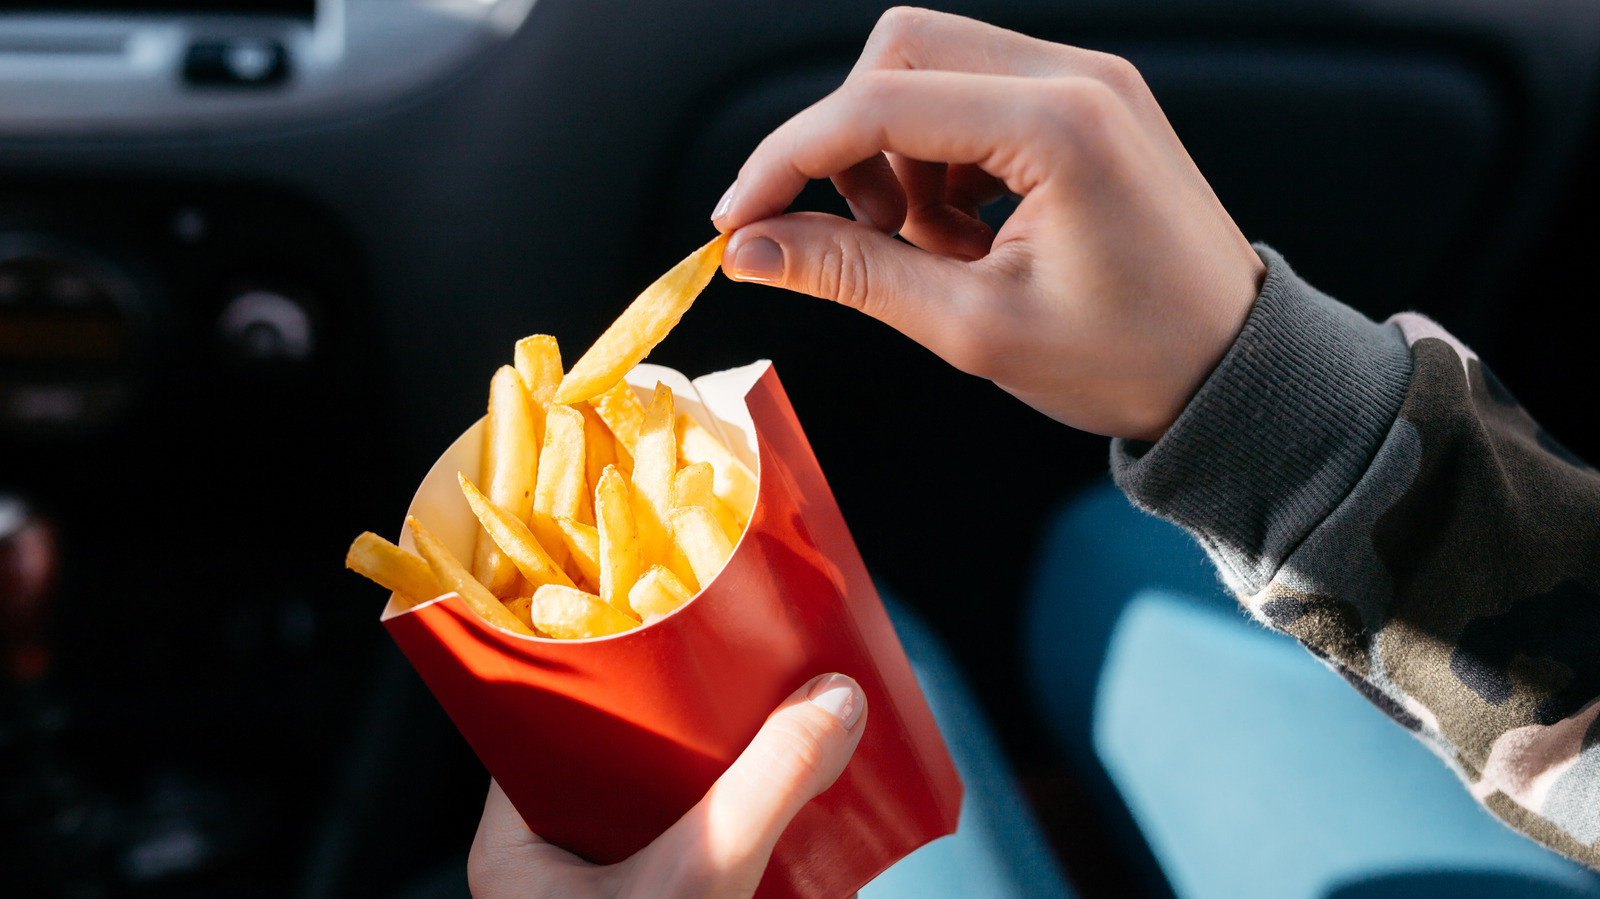 Car Sauce Dip Holder For Fries Fast Food